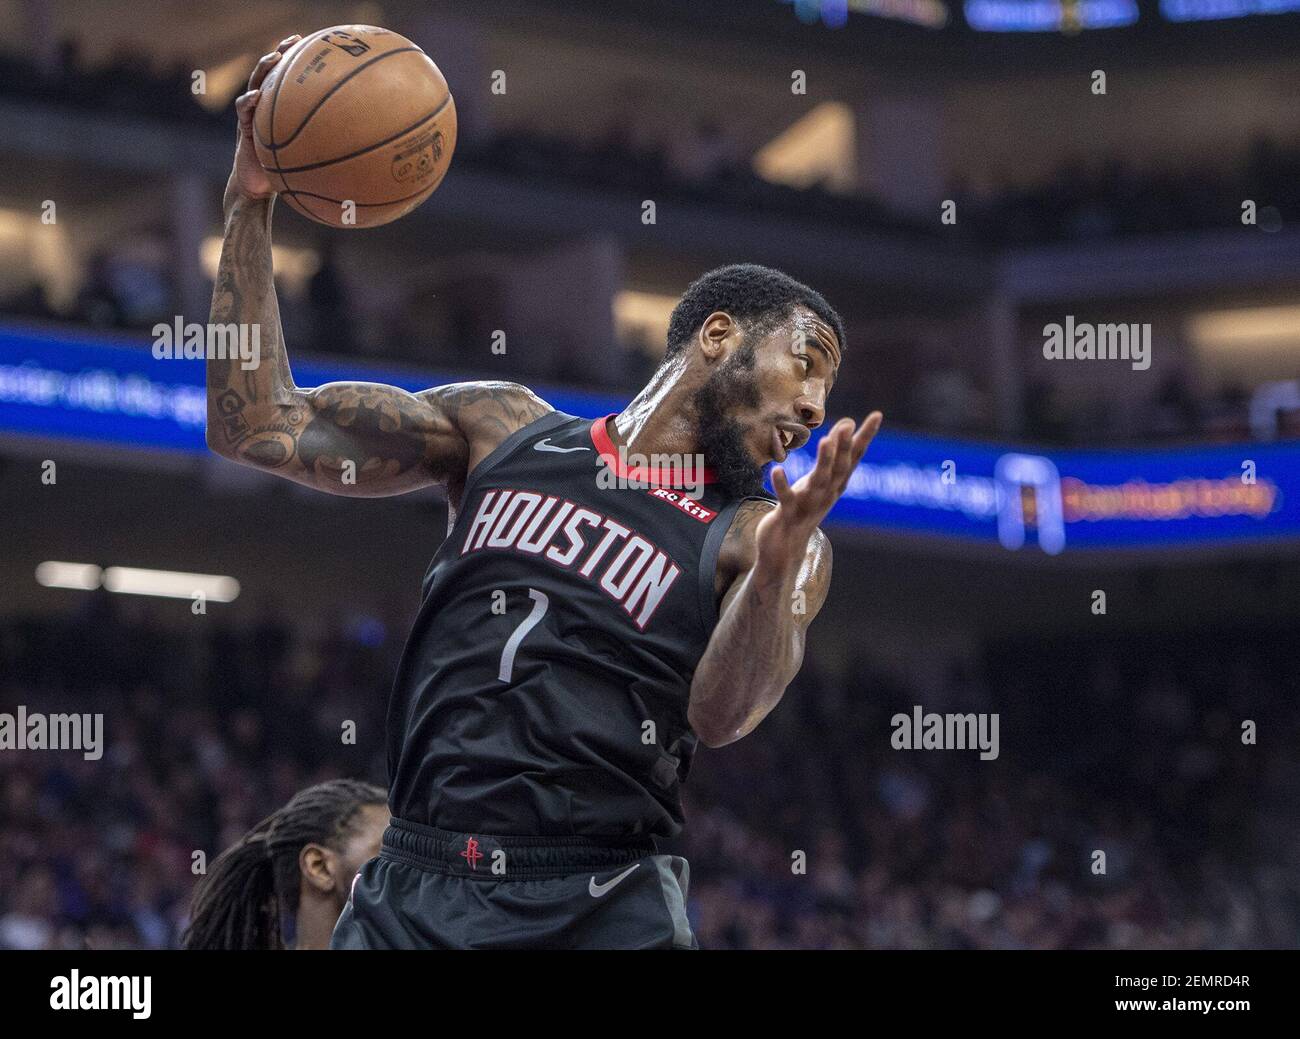 Iman Shumpert (1) des Houston Rockets a rebondi contre son ancienne équipe, les Sacramento Kings, au Golden 1 Centre de Sacramento, en Californie, le mardi 2 avril 2019. (Photo par Hector Amezcua/Sacramento Bee/TNS/Sipa USA) Banque D'Images